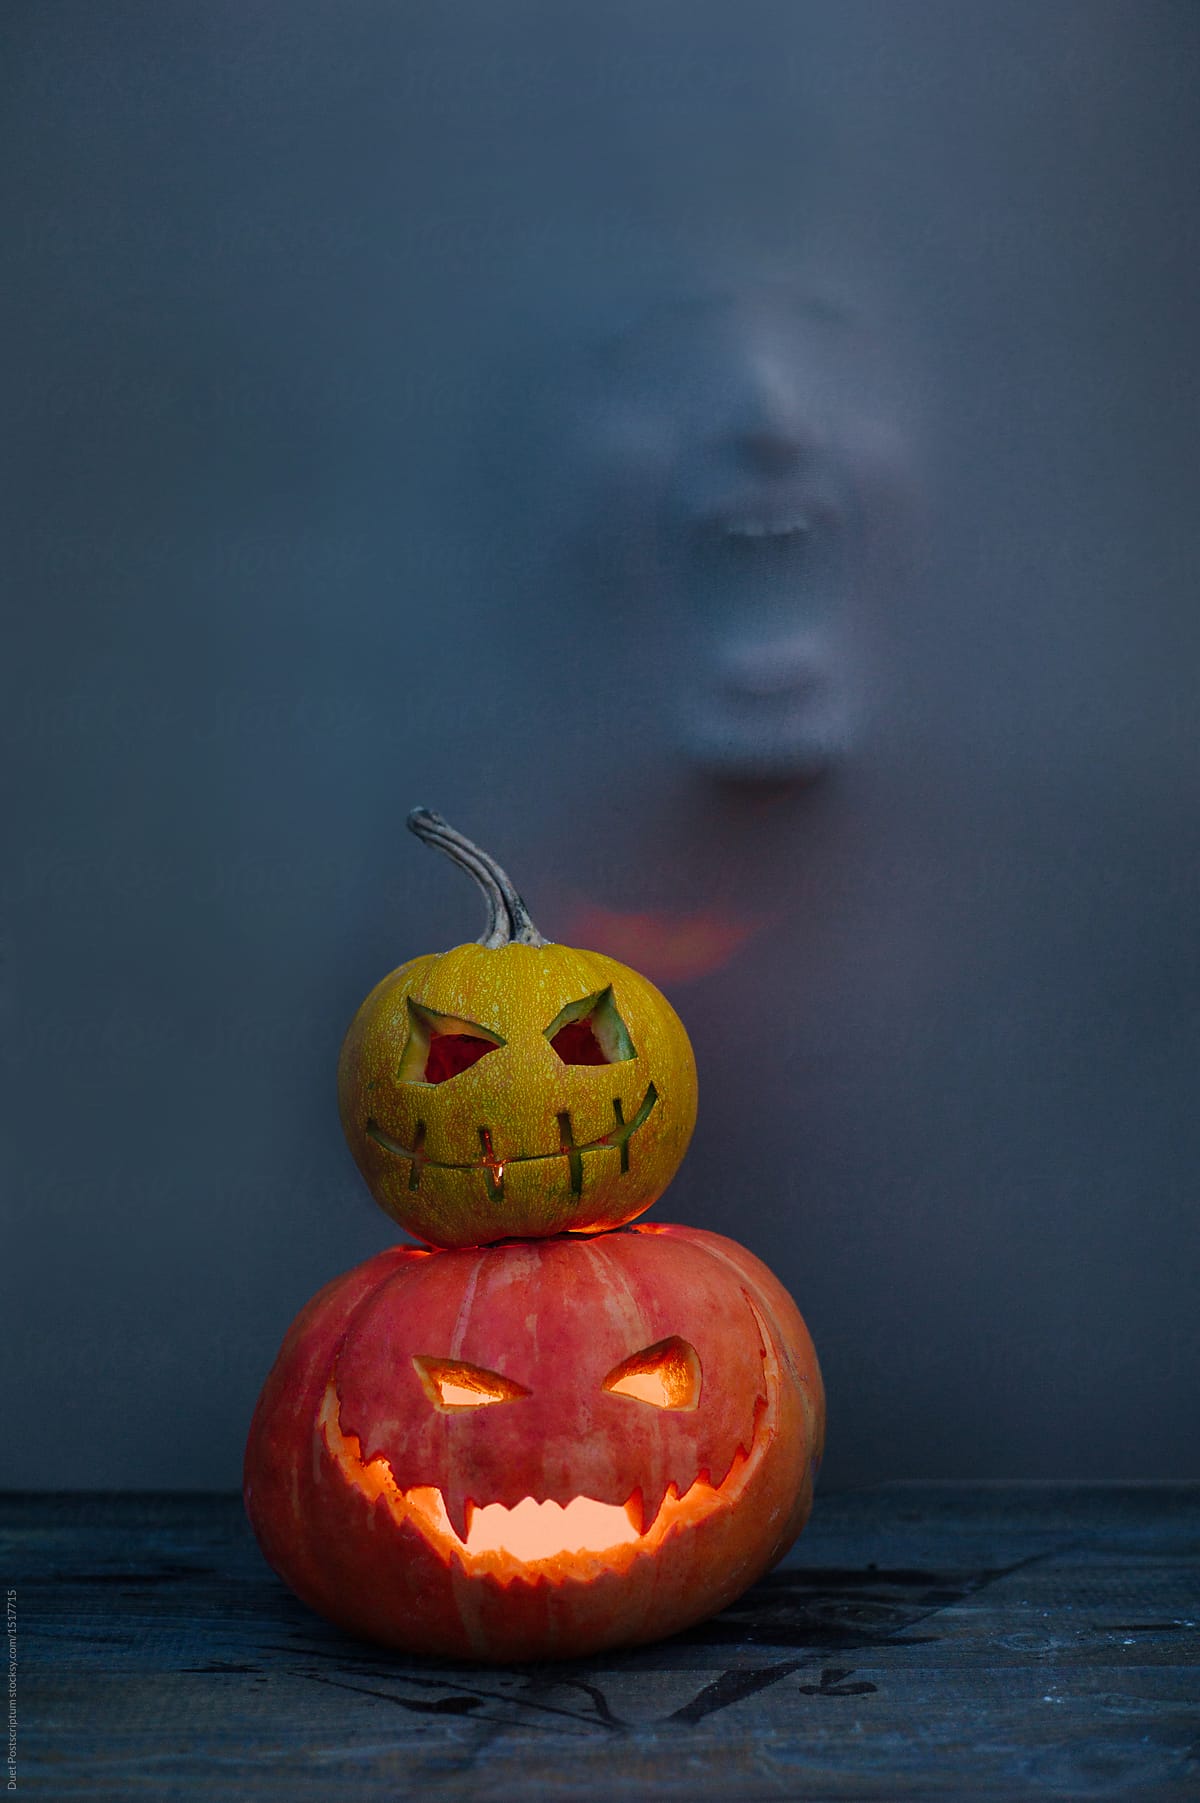 Pumpkin lanterns and mystic face